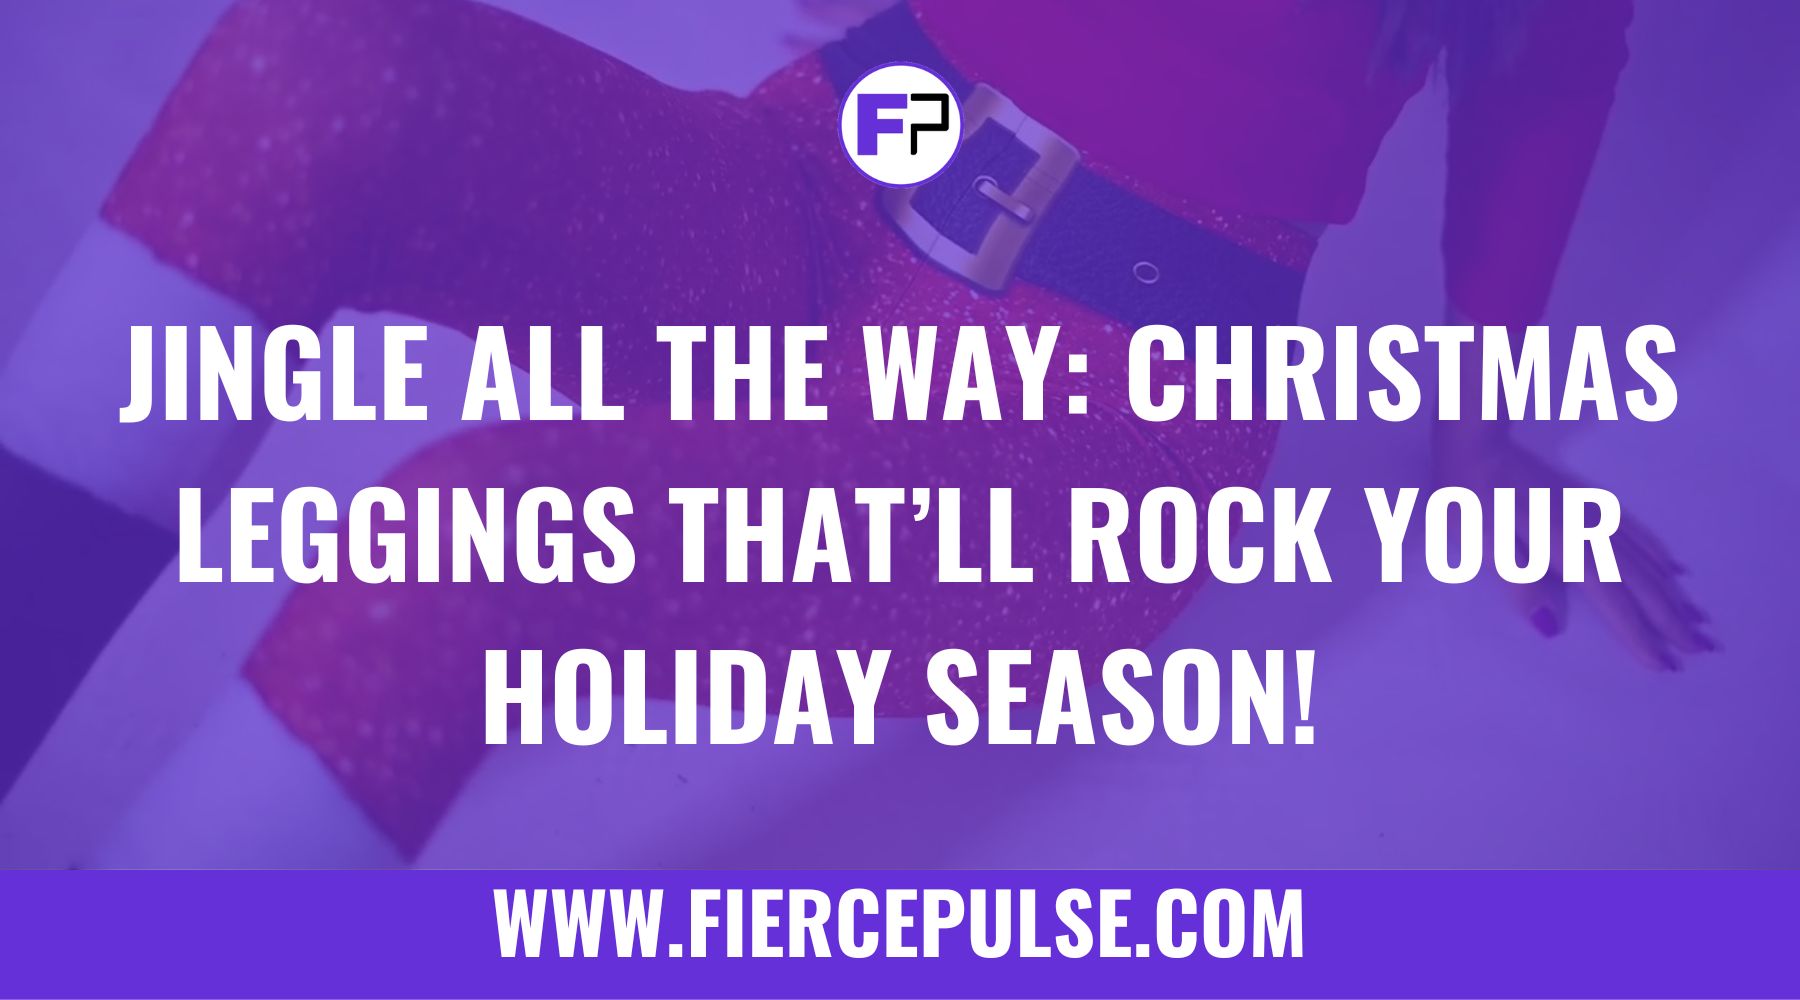 Jingle All the Way: Christmas Leggings that’ll Rock Your Holiday Season!